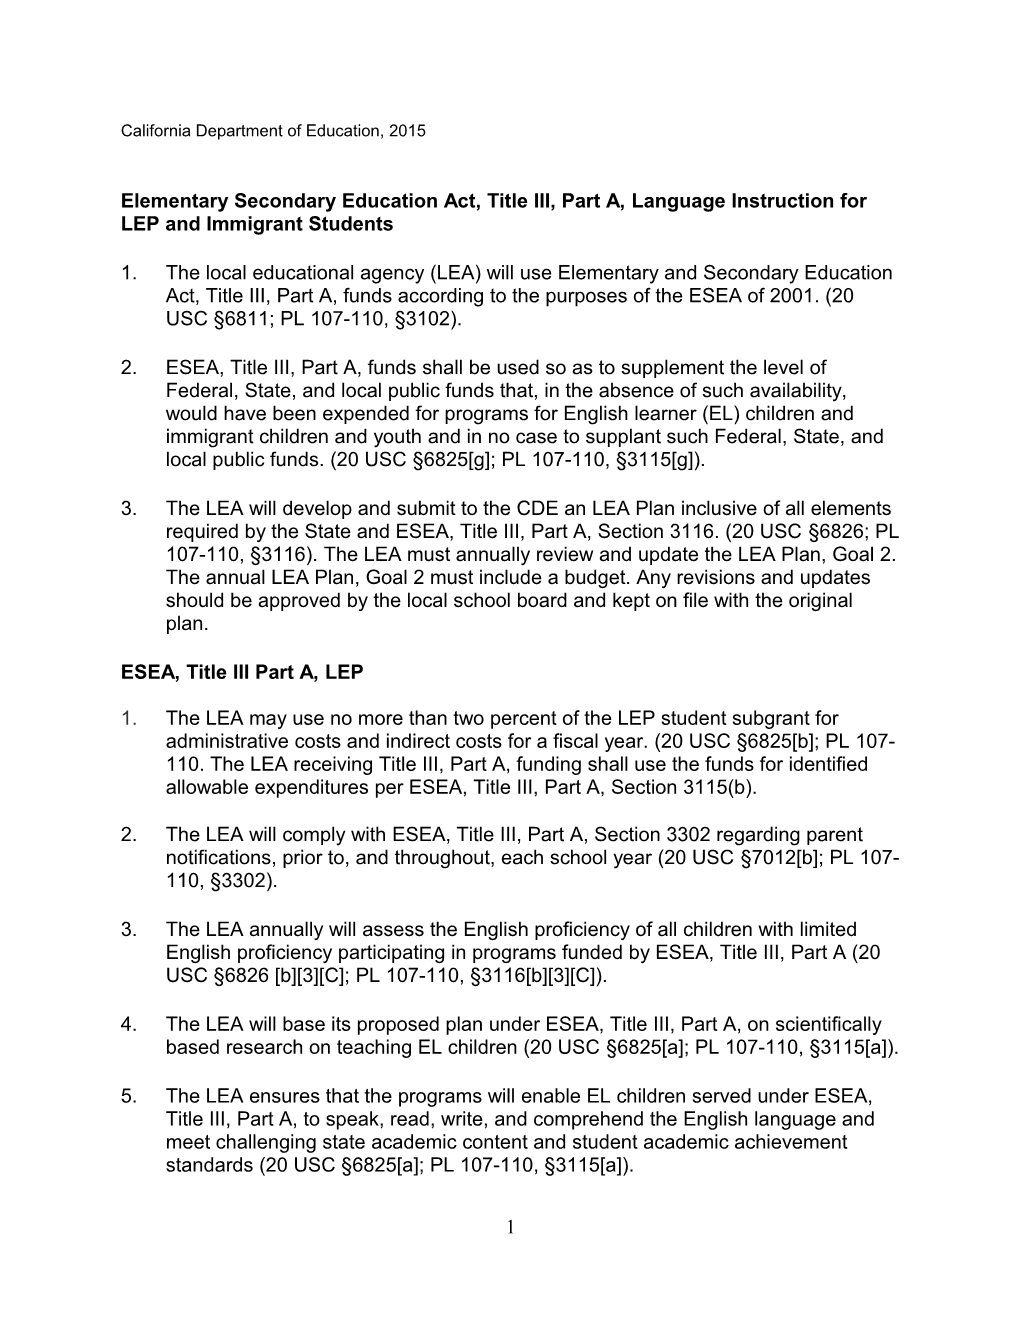 Att-15: Title III Imm Education Subgrant Program (CA Dept of Education)